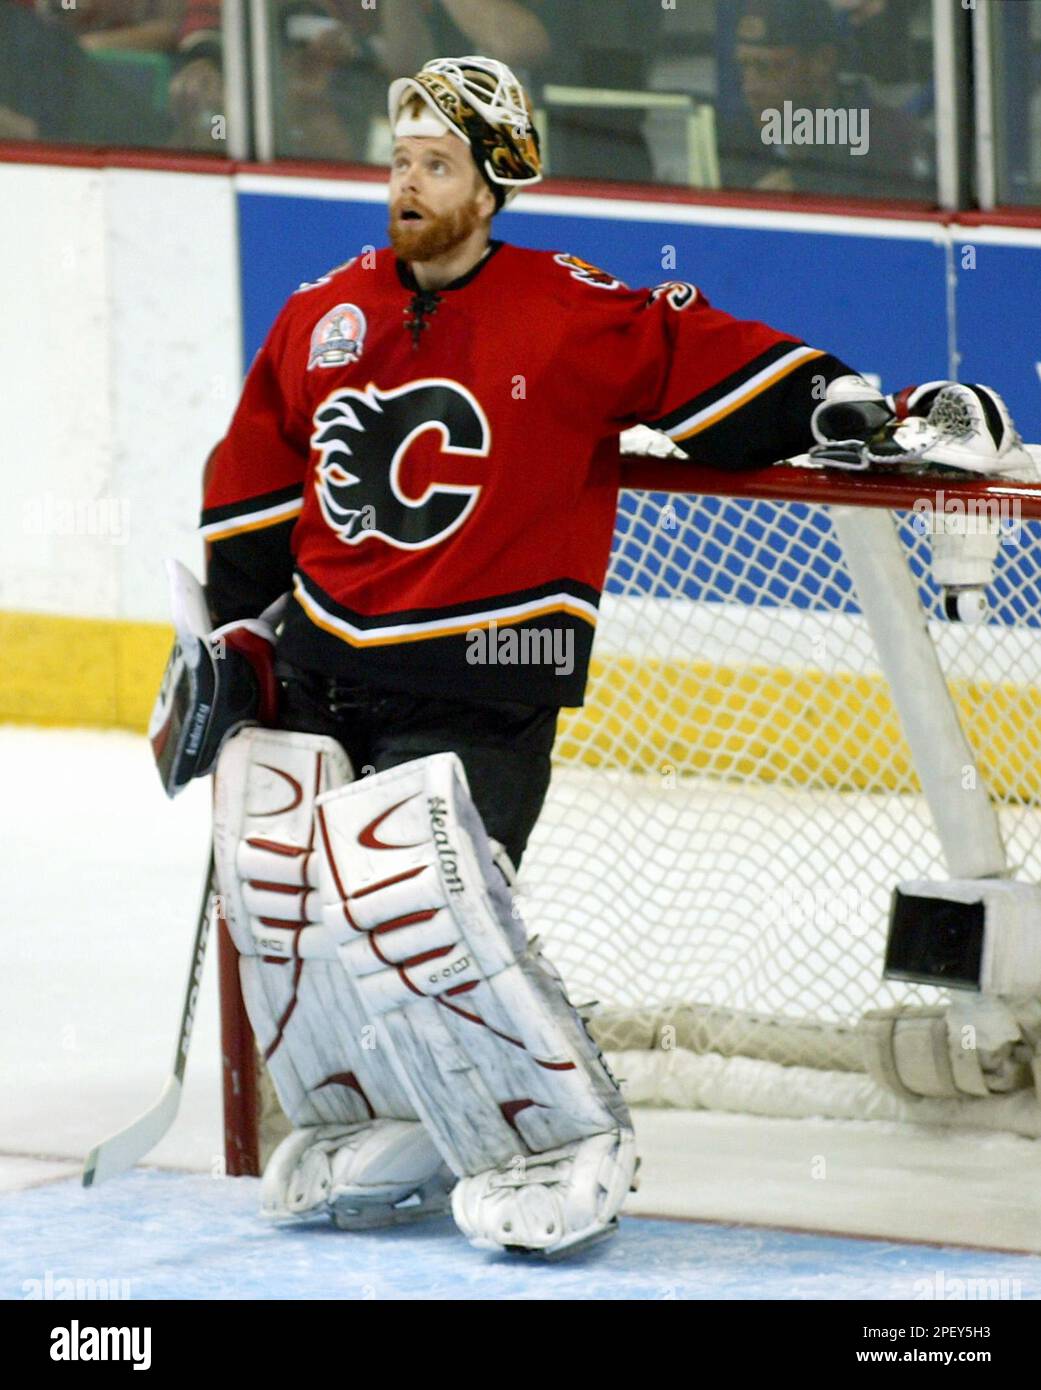 Miikka Kiprusoff, Calgary Flames